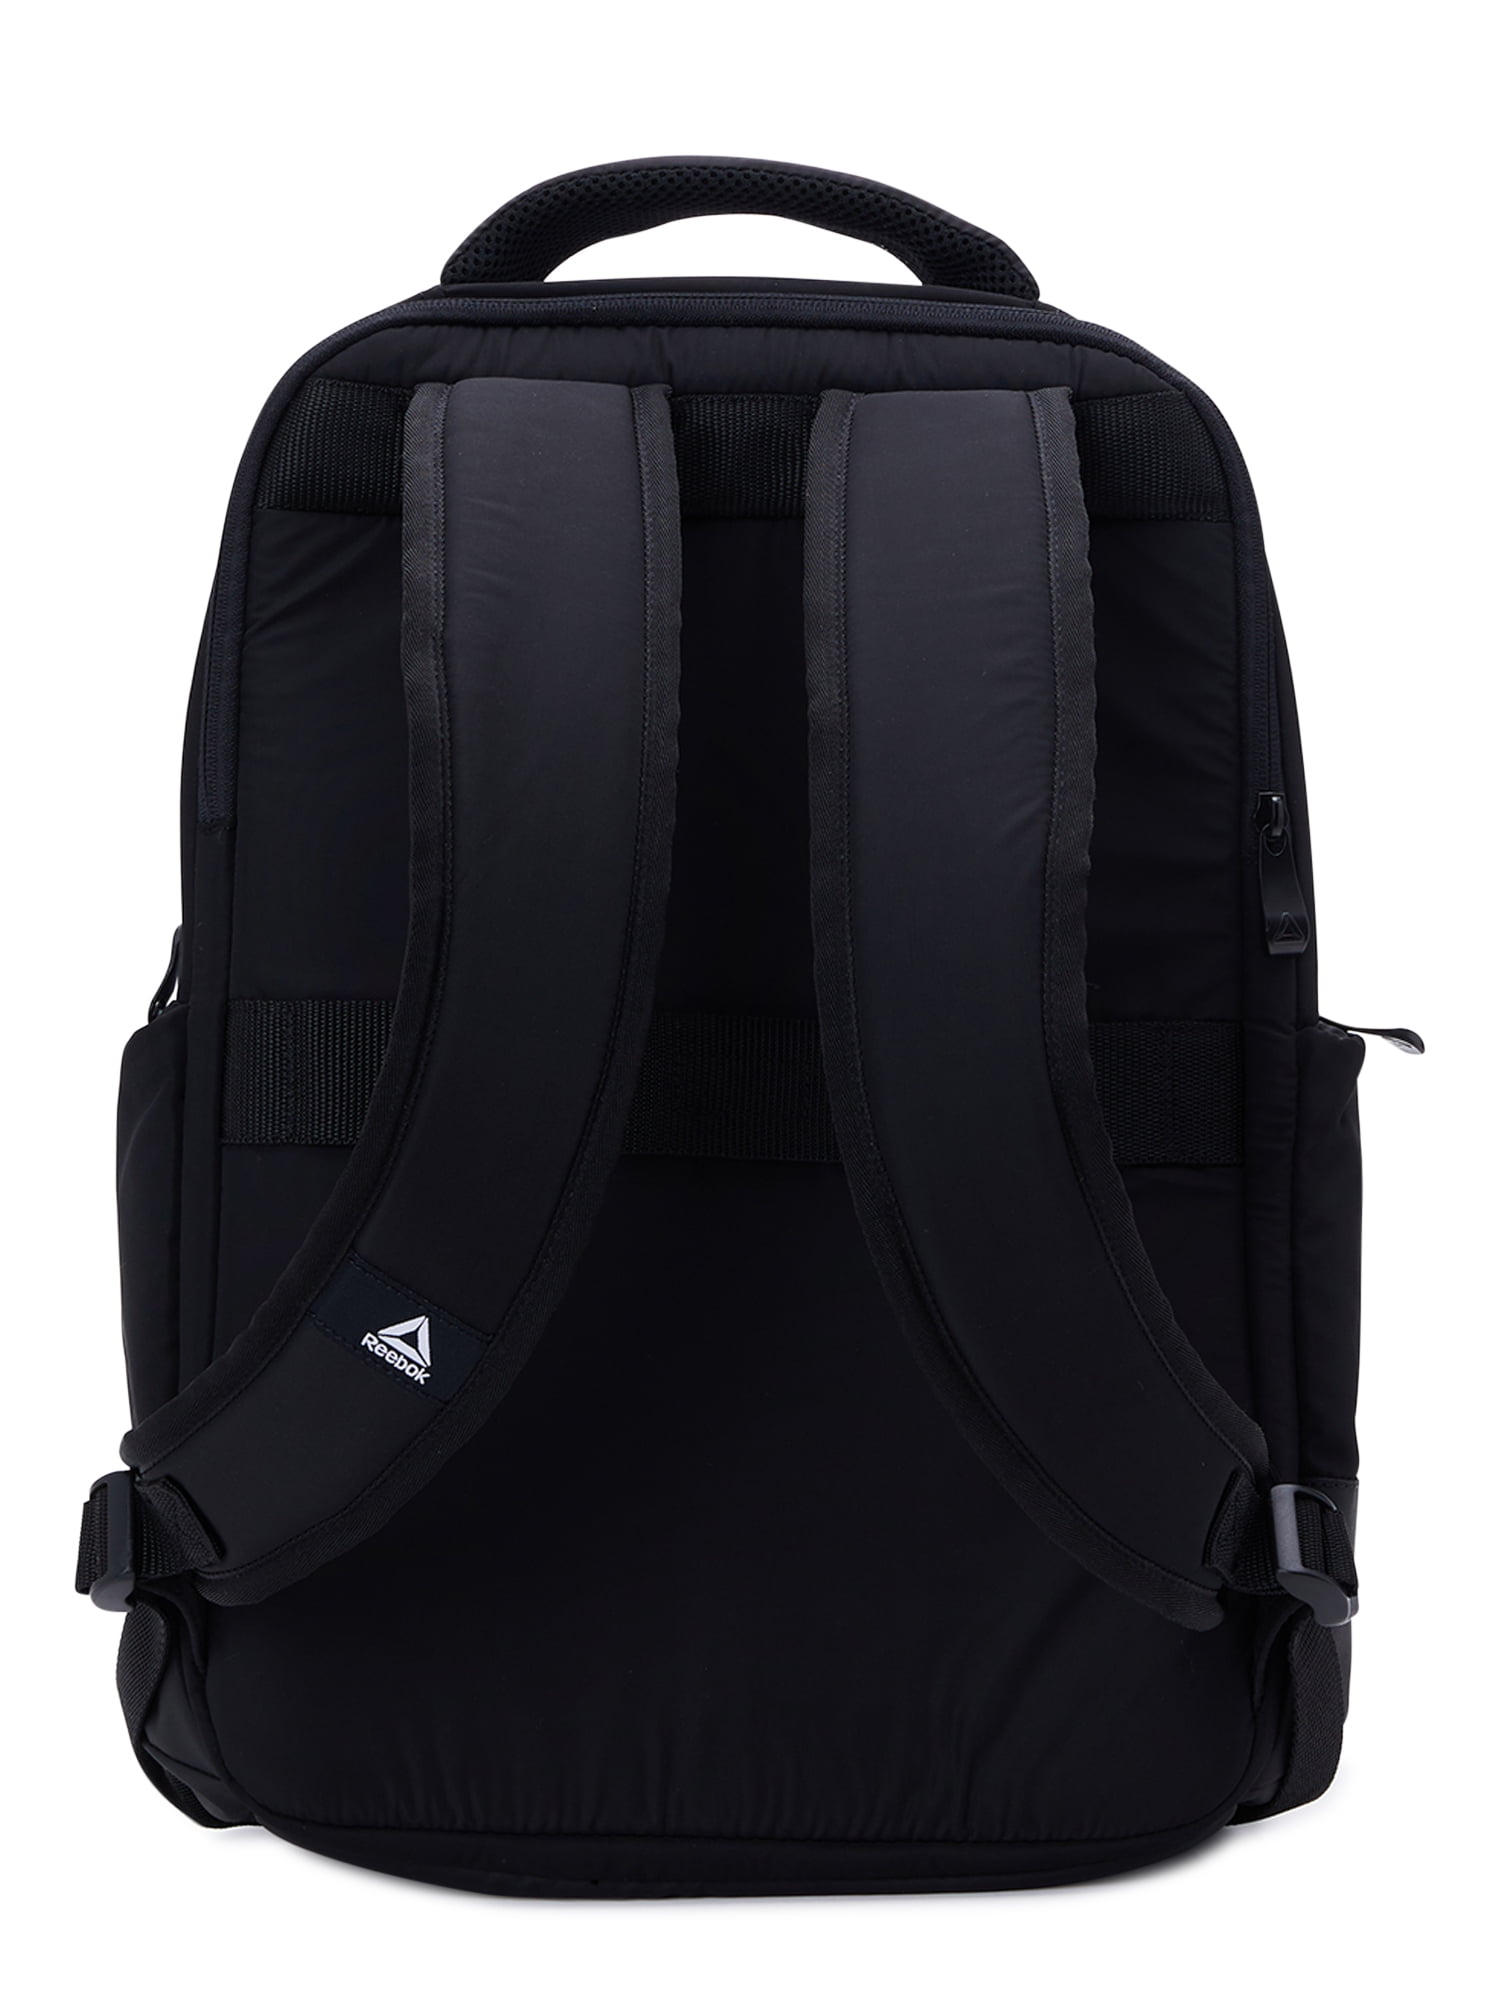 Reebok Basecamp Backpack, Navy Blue, Laptop Pocket, School Work, NEW! | eBay